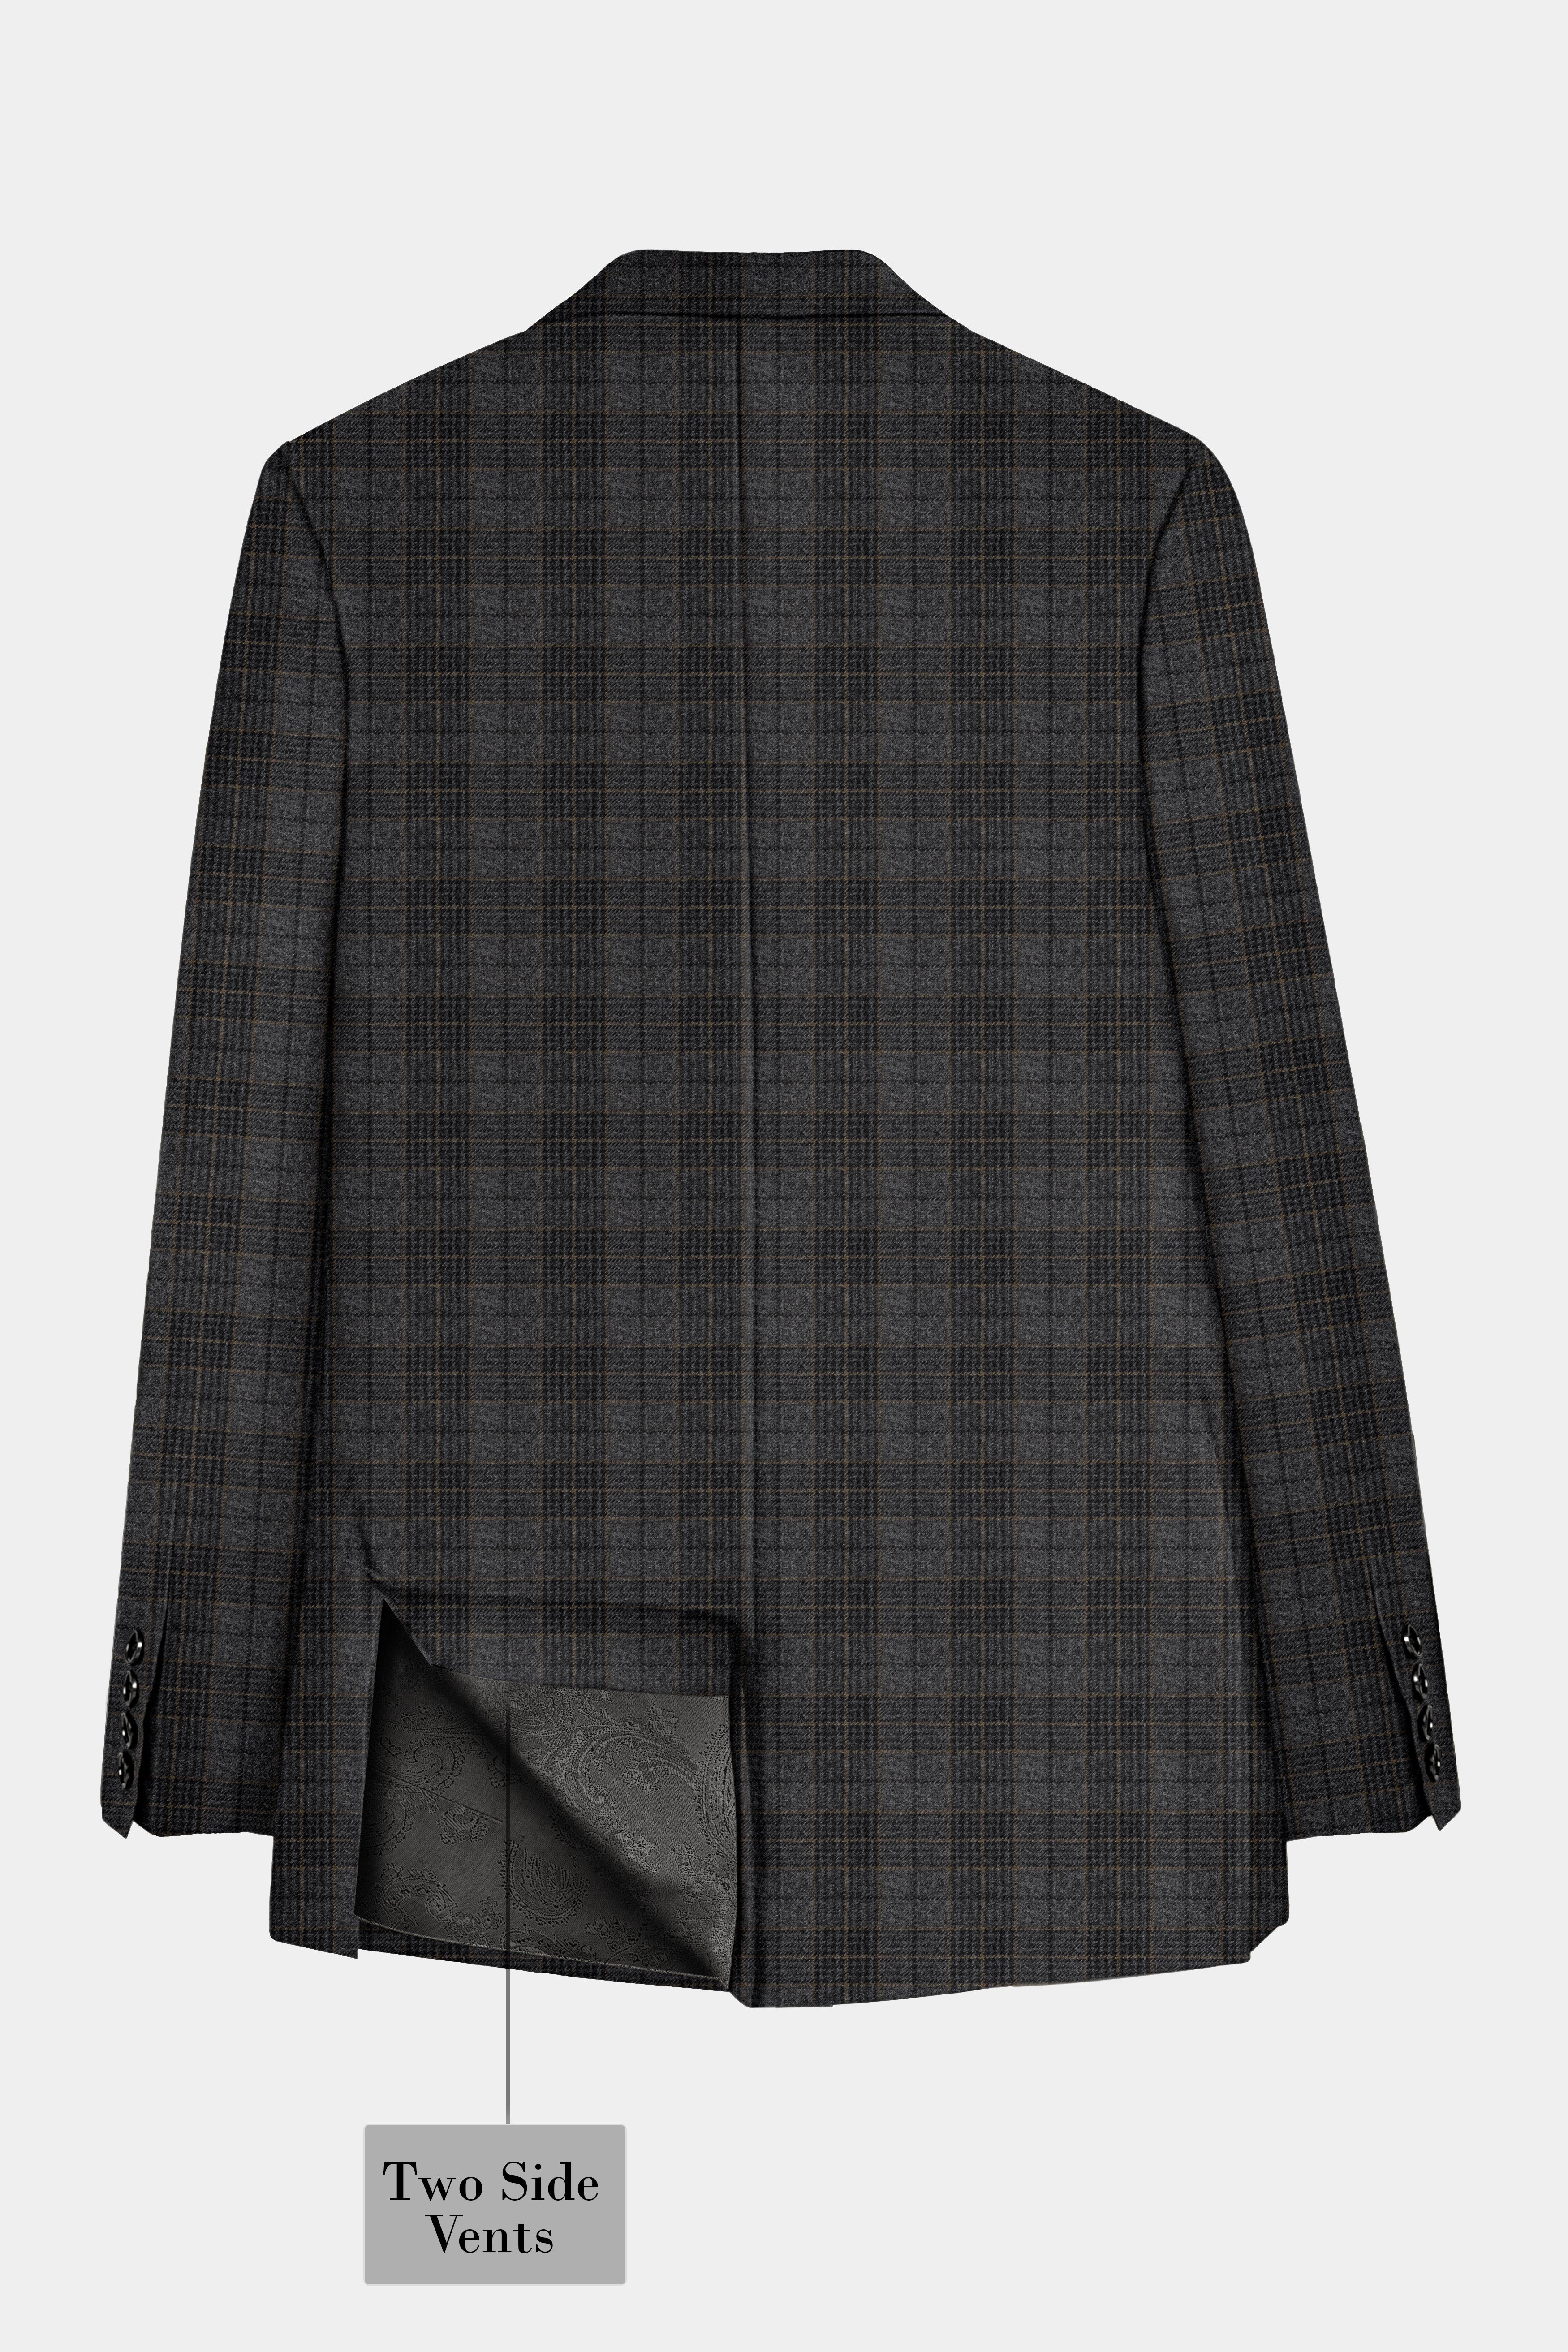 Charcoal Gray Plaid Tweed Blazer